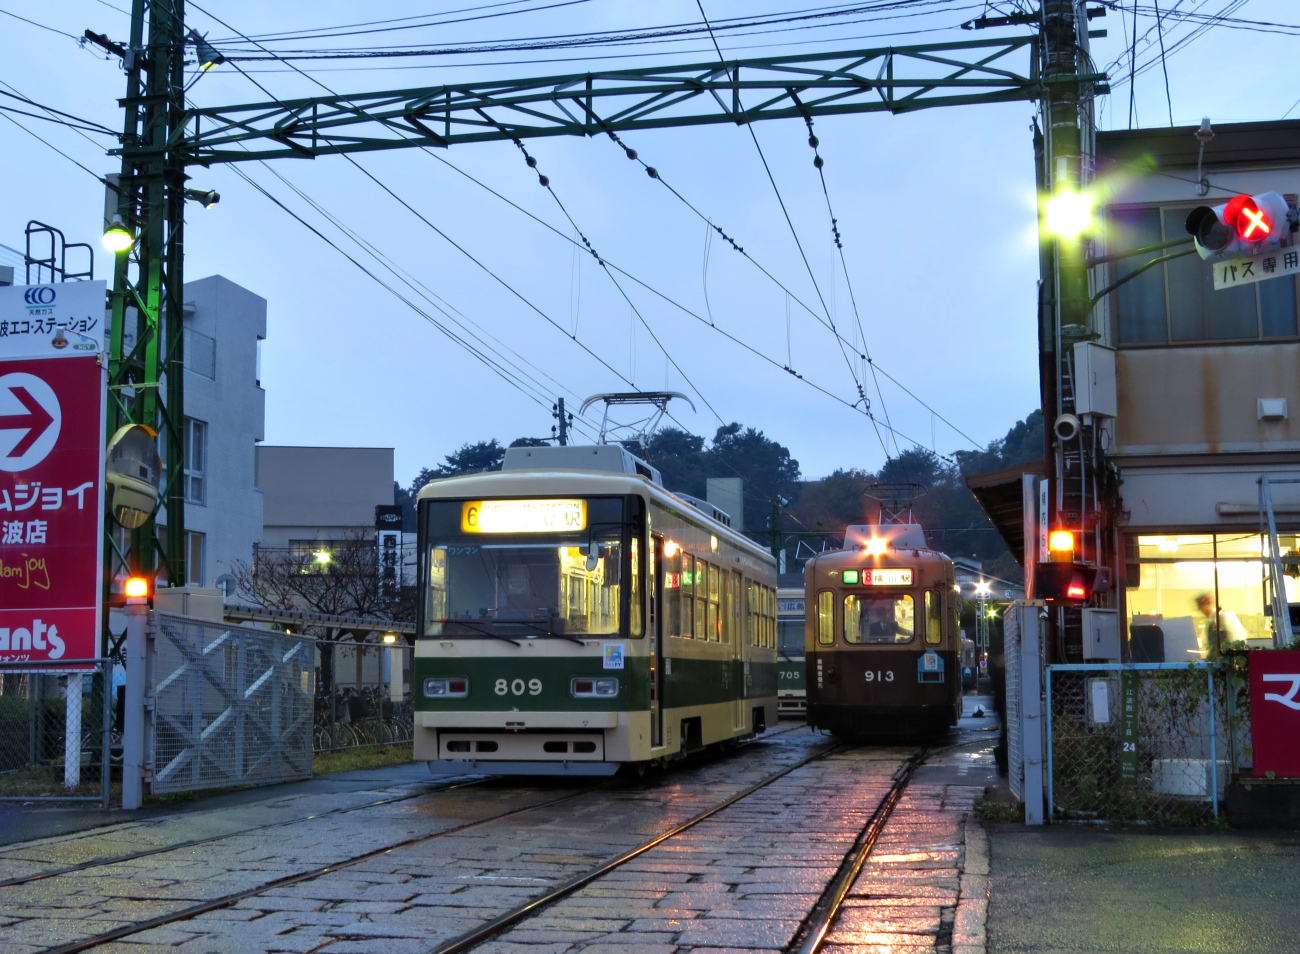 Хиросима, Aruna Kōki № 809; Хиросима, Ōsaka Sharyō Kōgyō № 913; Хиросима — Трамвайное депо Eba